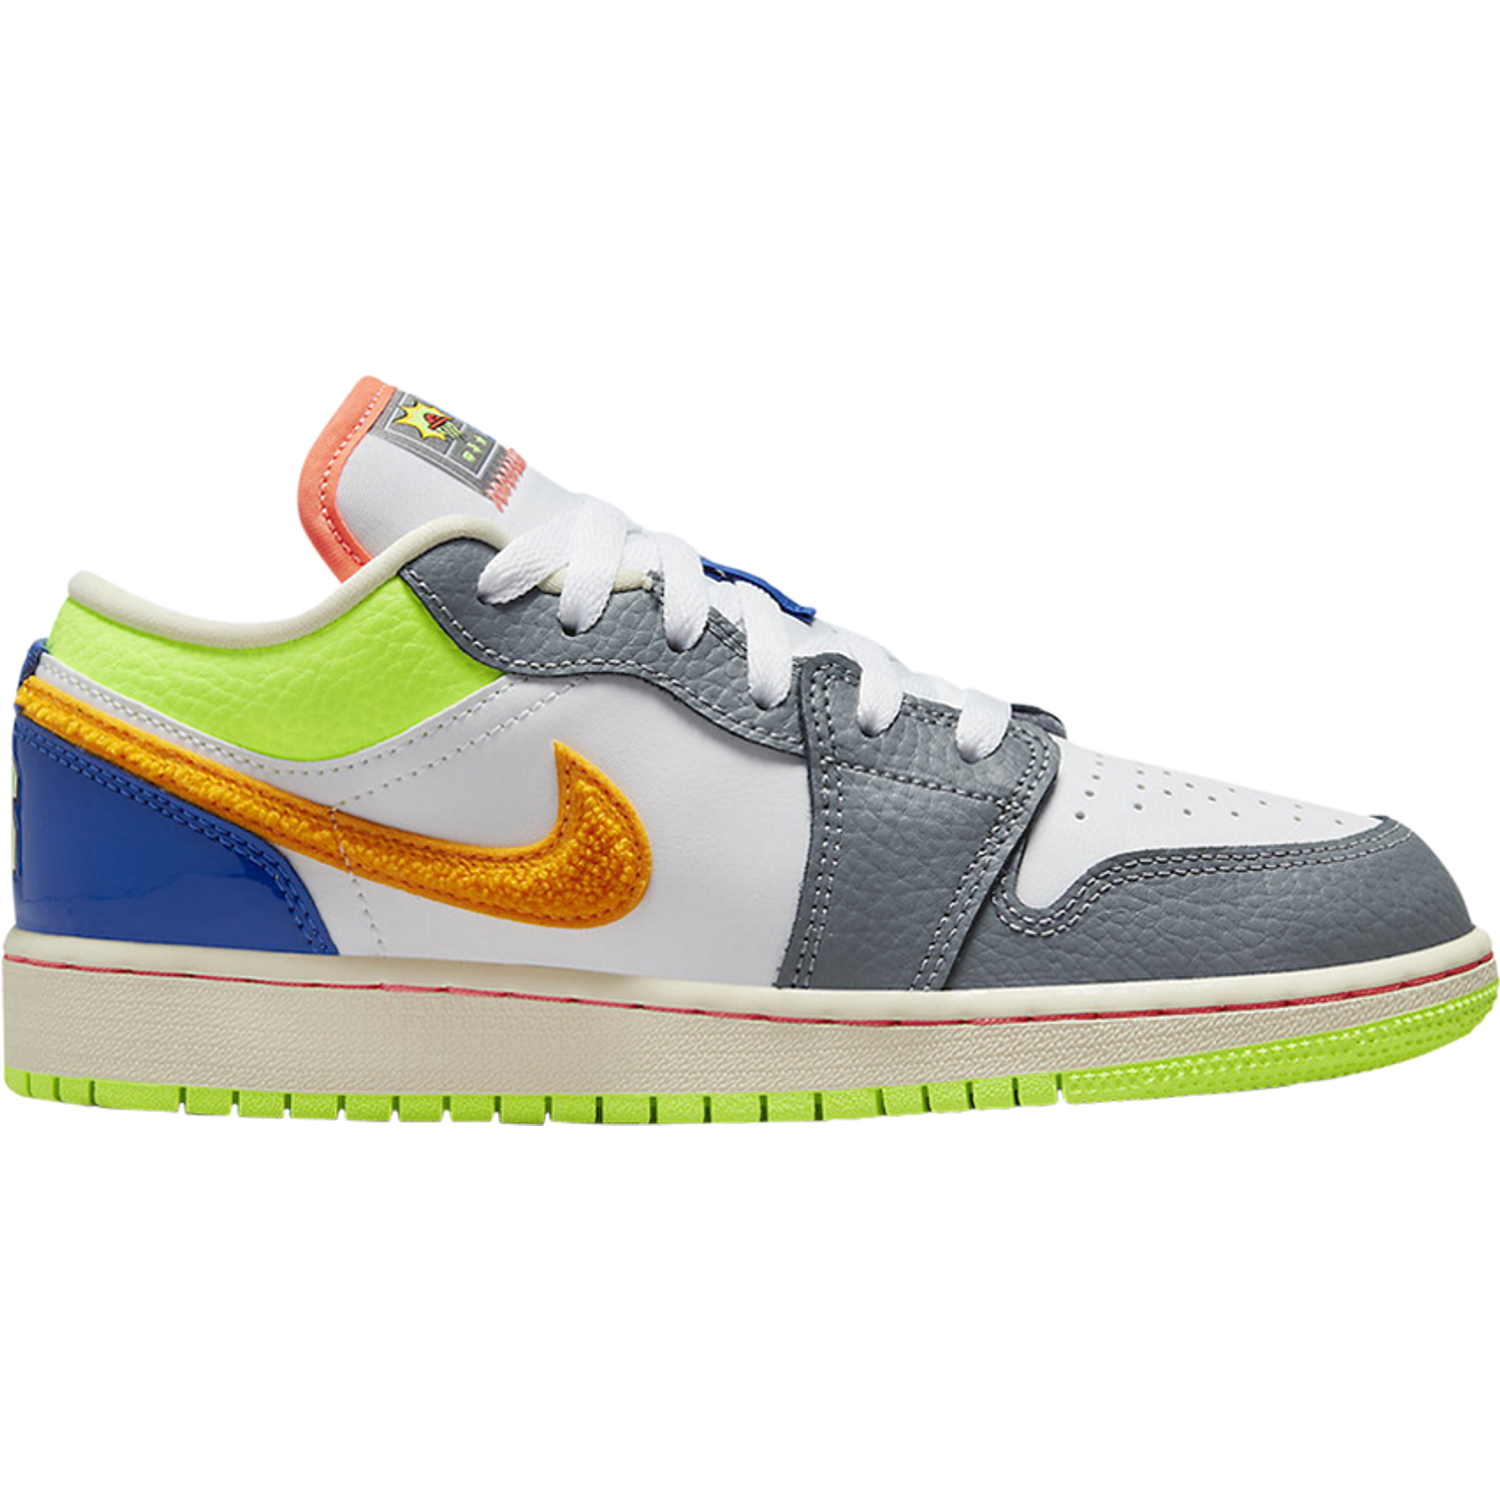 Кроссовки Nike Air Jordan 1 Low GS, разноцветный кроссовки air jordan men s shoes nike air 1 low usa синий белый серый